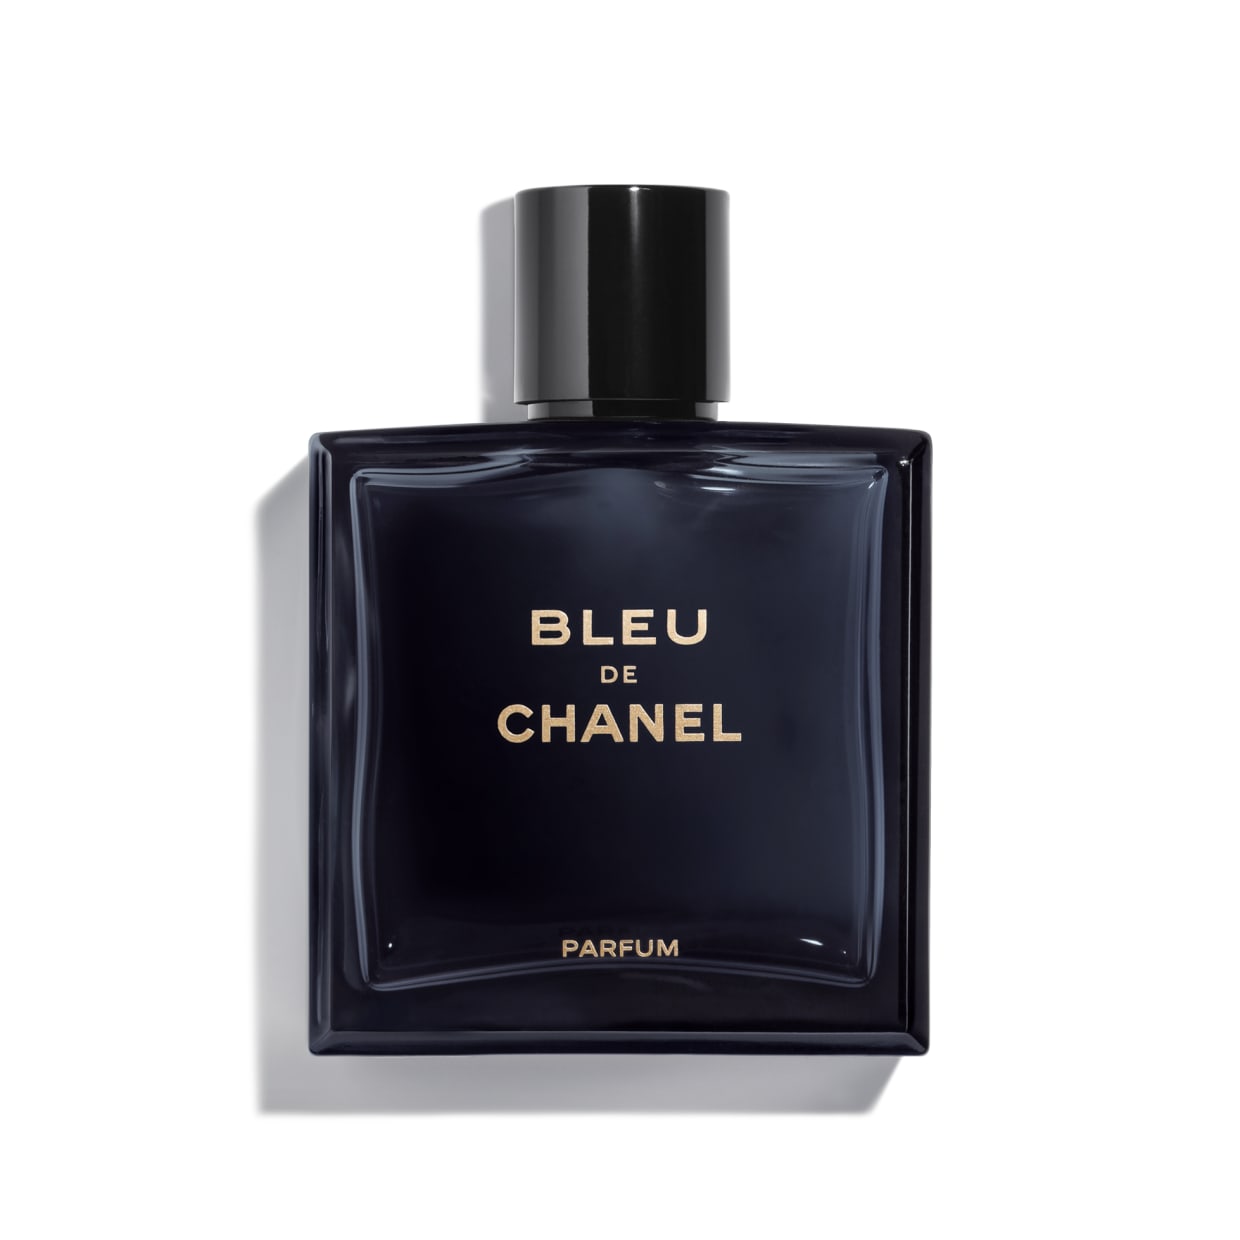 CHANEL bleu de chanel parfum for men – SPRING NUTRITION